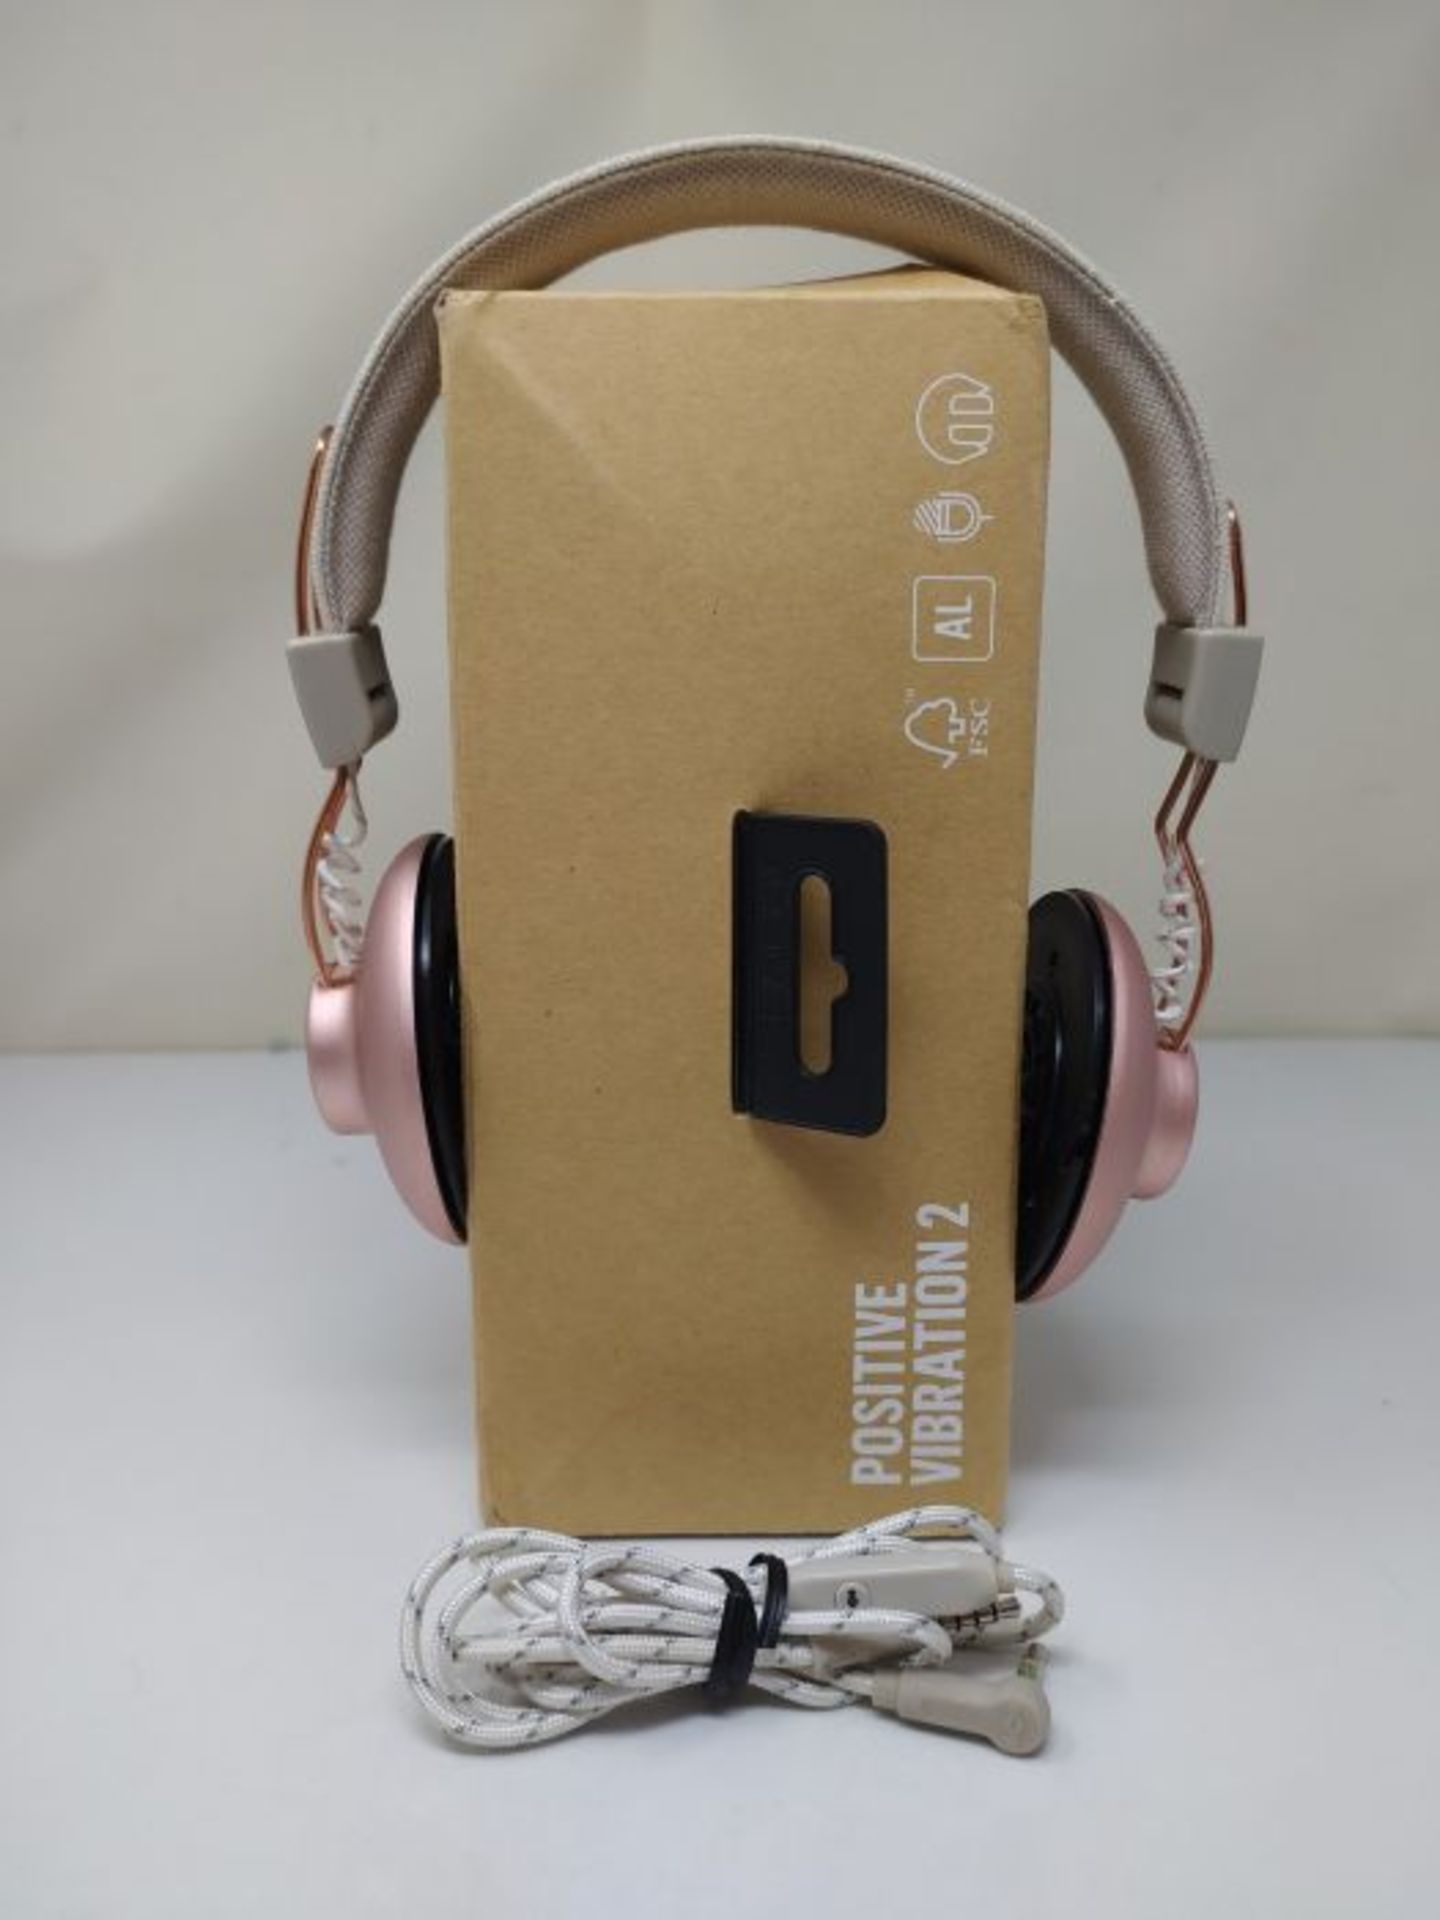 House of Marley Positive Vibration 2 On Ear Headphones - Foldable Headphones, Comforta - Image 3 of 3